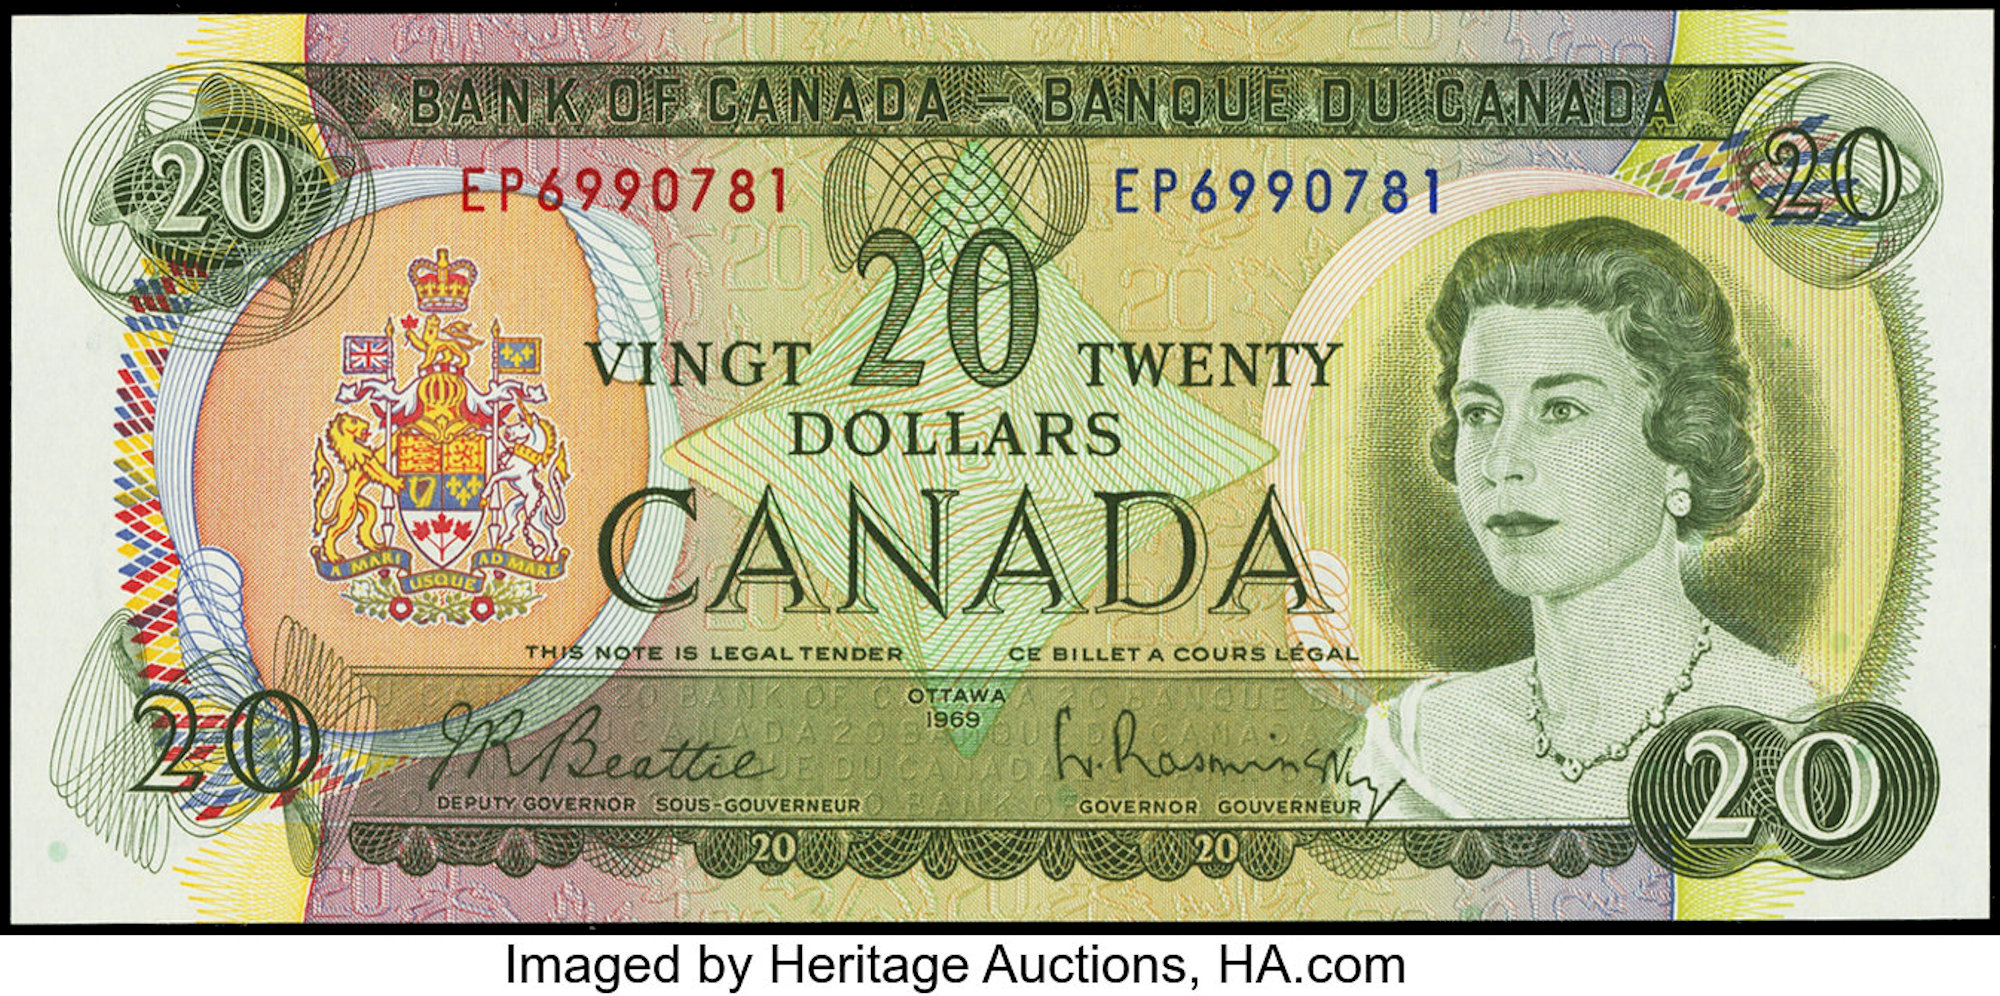 Most Treasured Banknotes Canada 5 Dollar $5 1979 UNC P 92 Lawson-Bouey